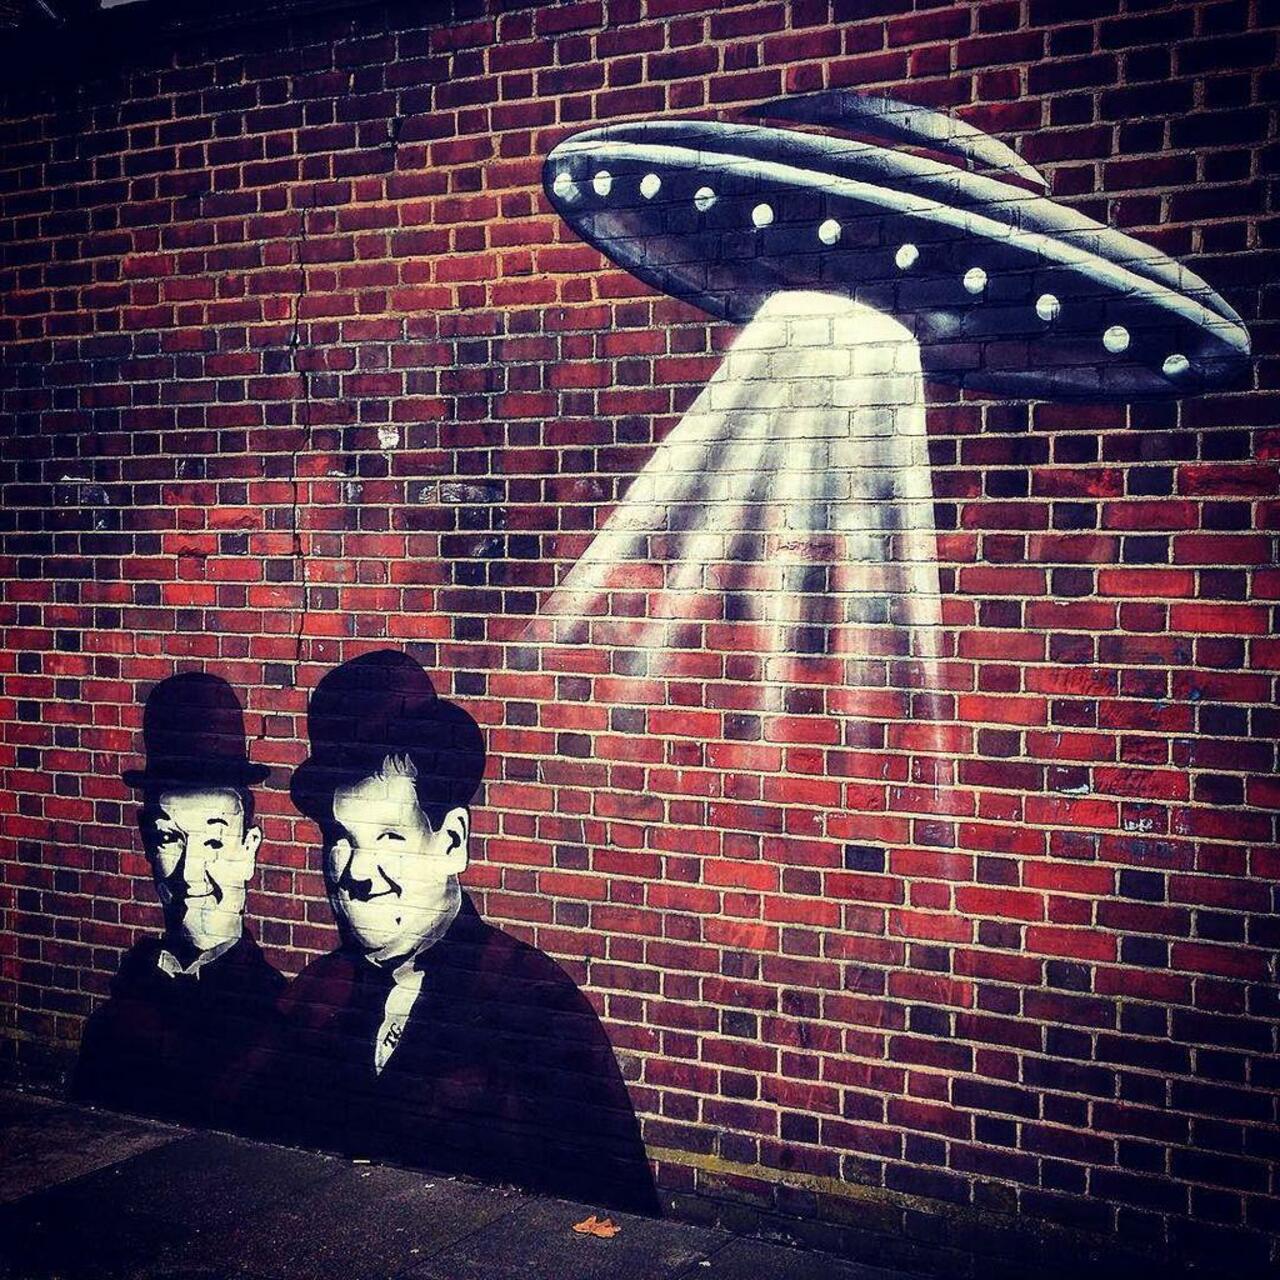 More impressive #StreetArt in #NorthLondon #LaurelAndHardy #UFO #Graffiti #London #harringay #streetartlondon #graf… http://t.co/9lZASrOU4A